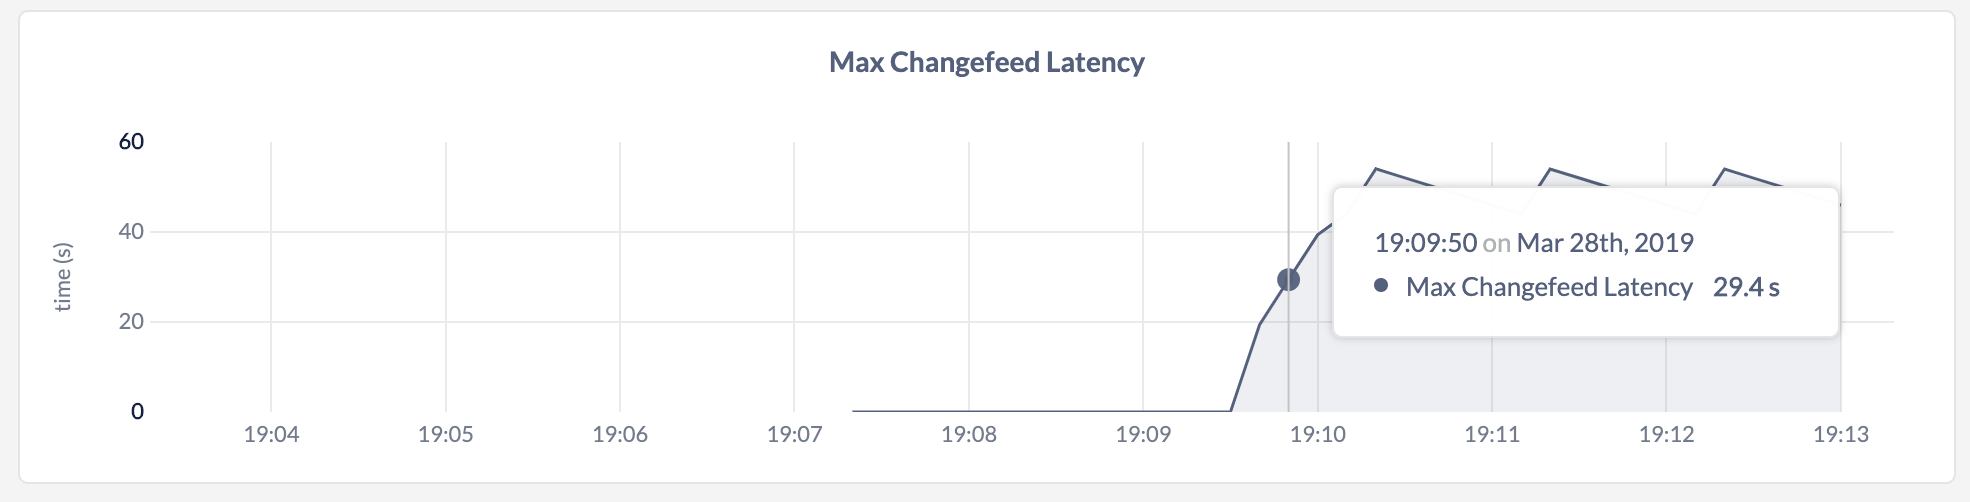 CockroachDB Admin UI Max Changefeed Latency graph